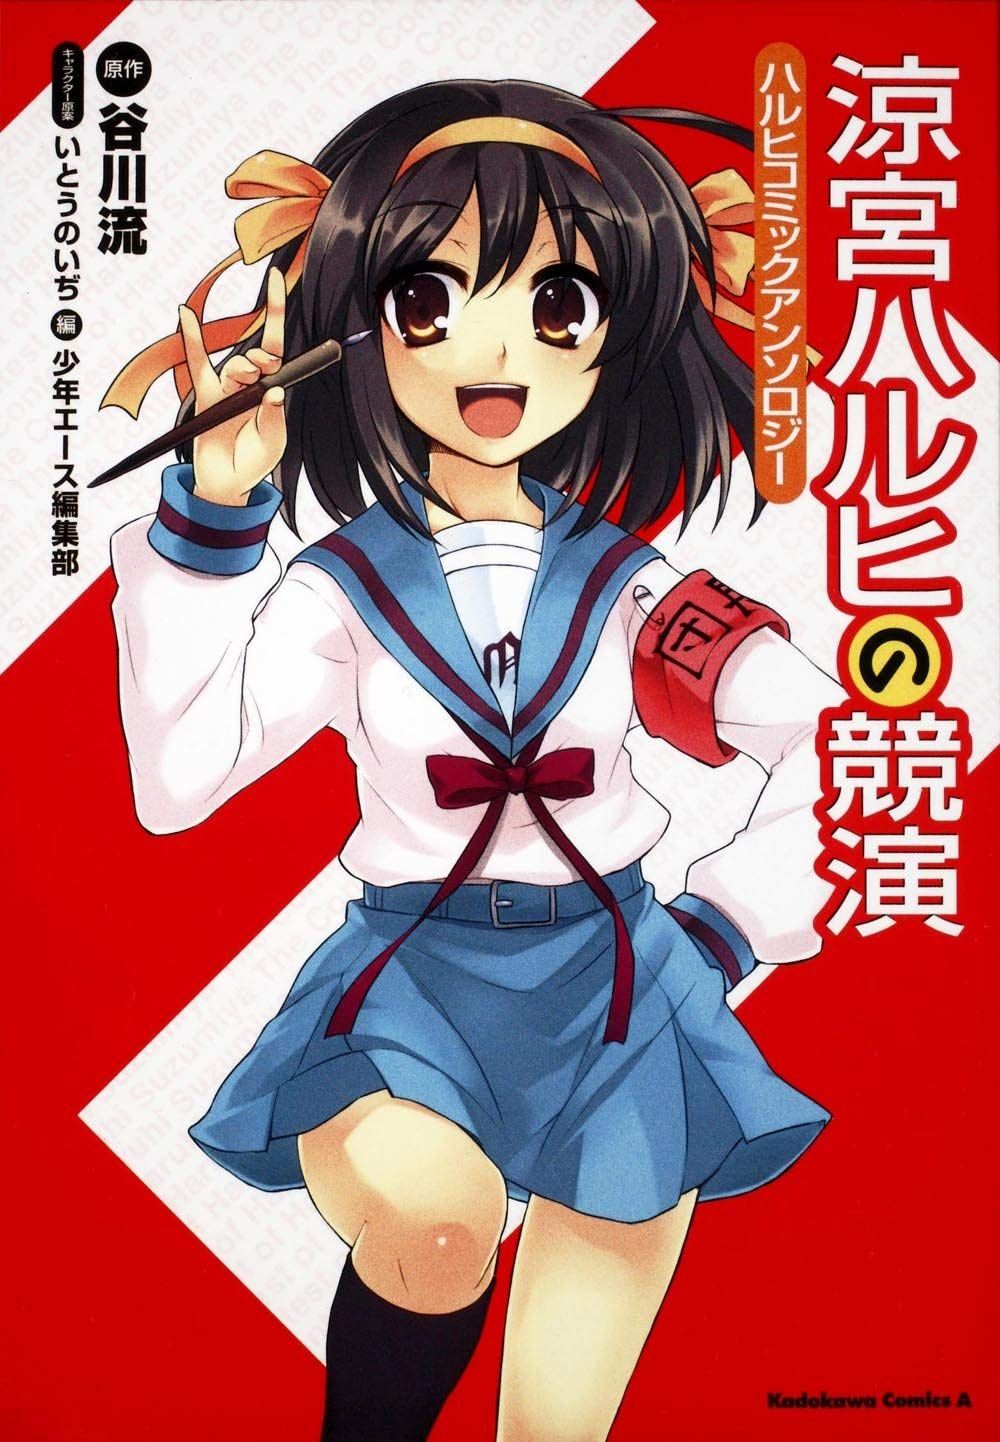 Suzumiya Haruhi no Shukusai - Haruhi Comic Anthology